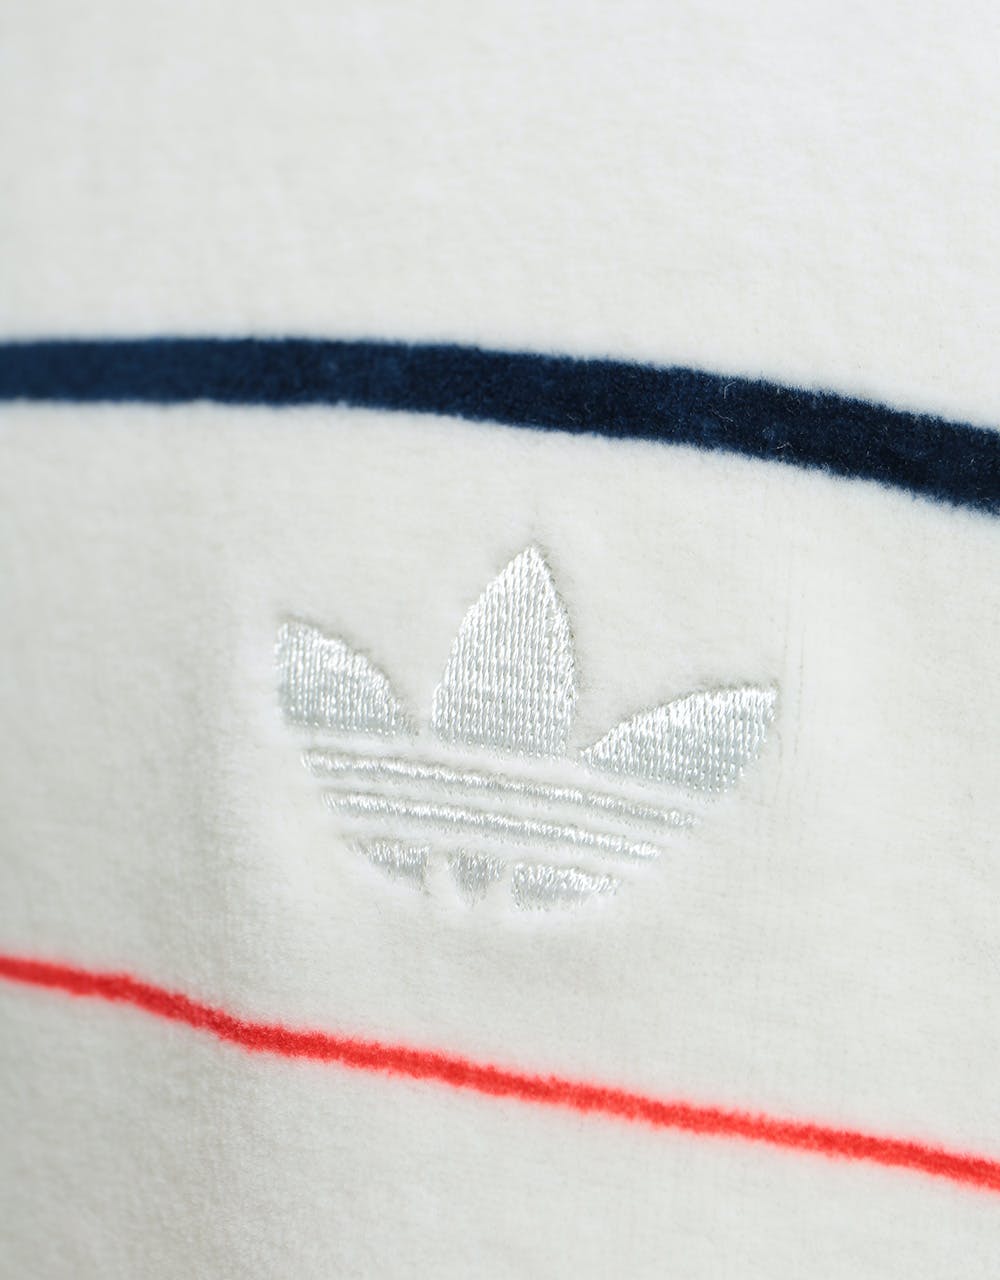 Adidas Velour Jersey T-Shirt - Off White/Collegiate Navy/Scarlet